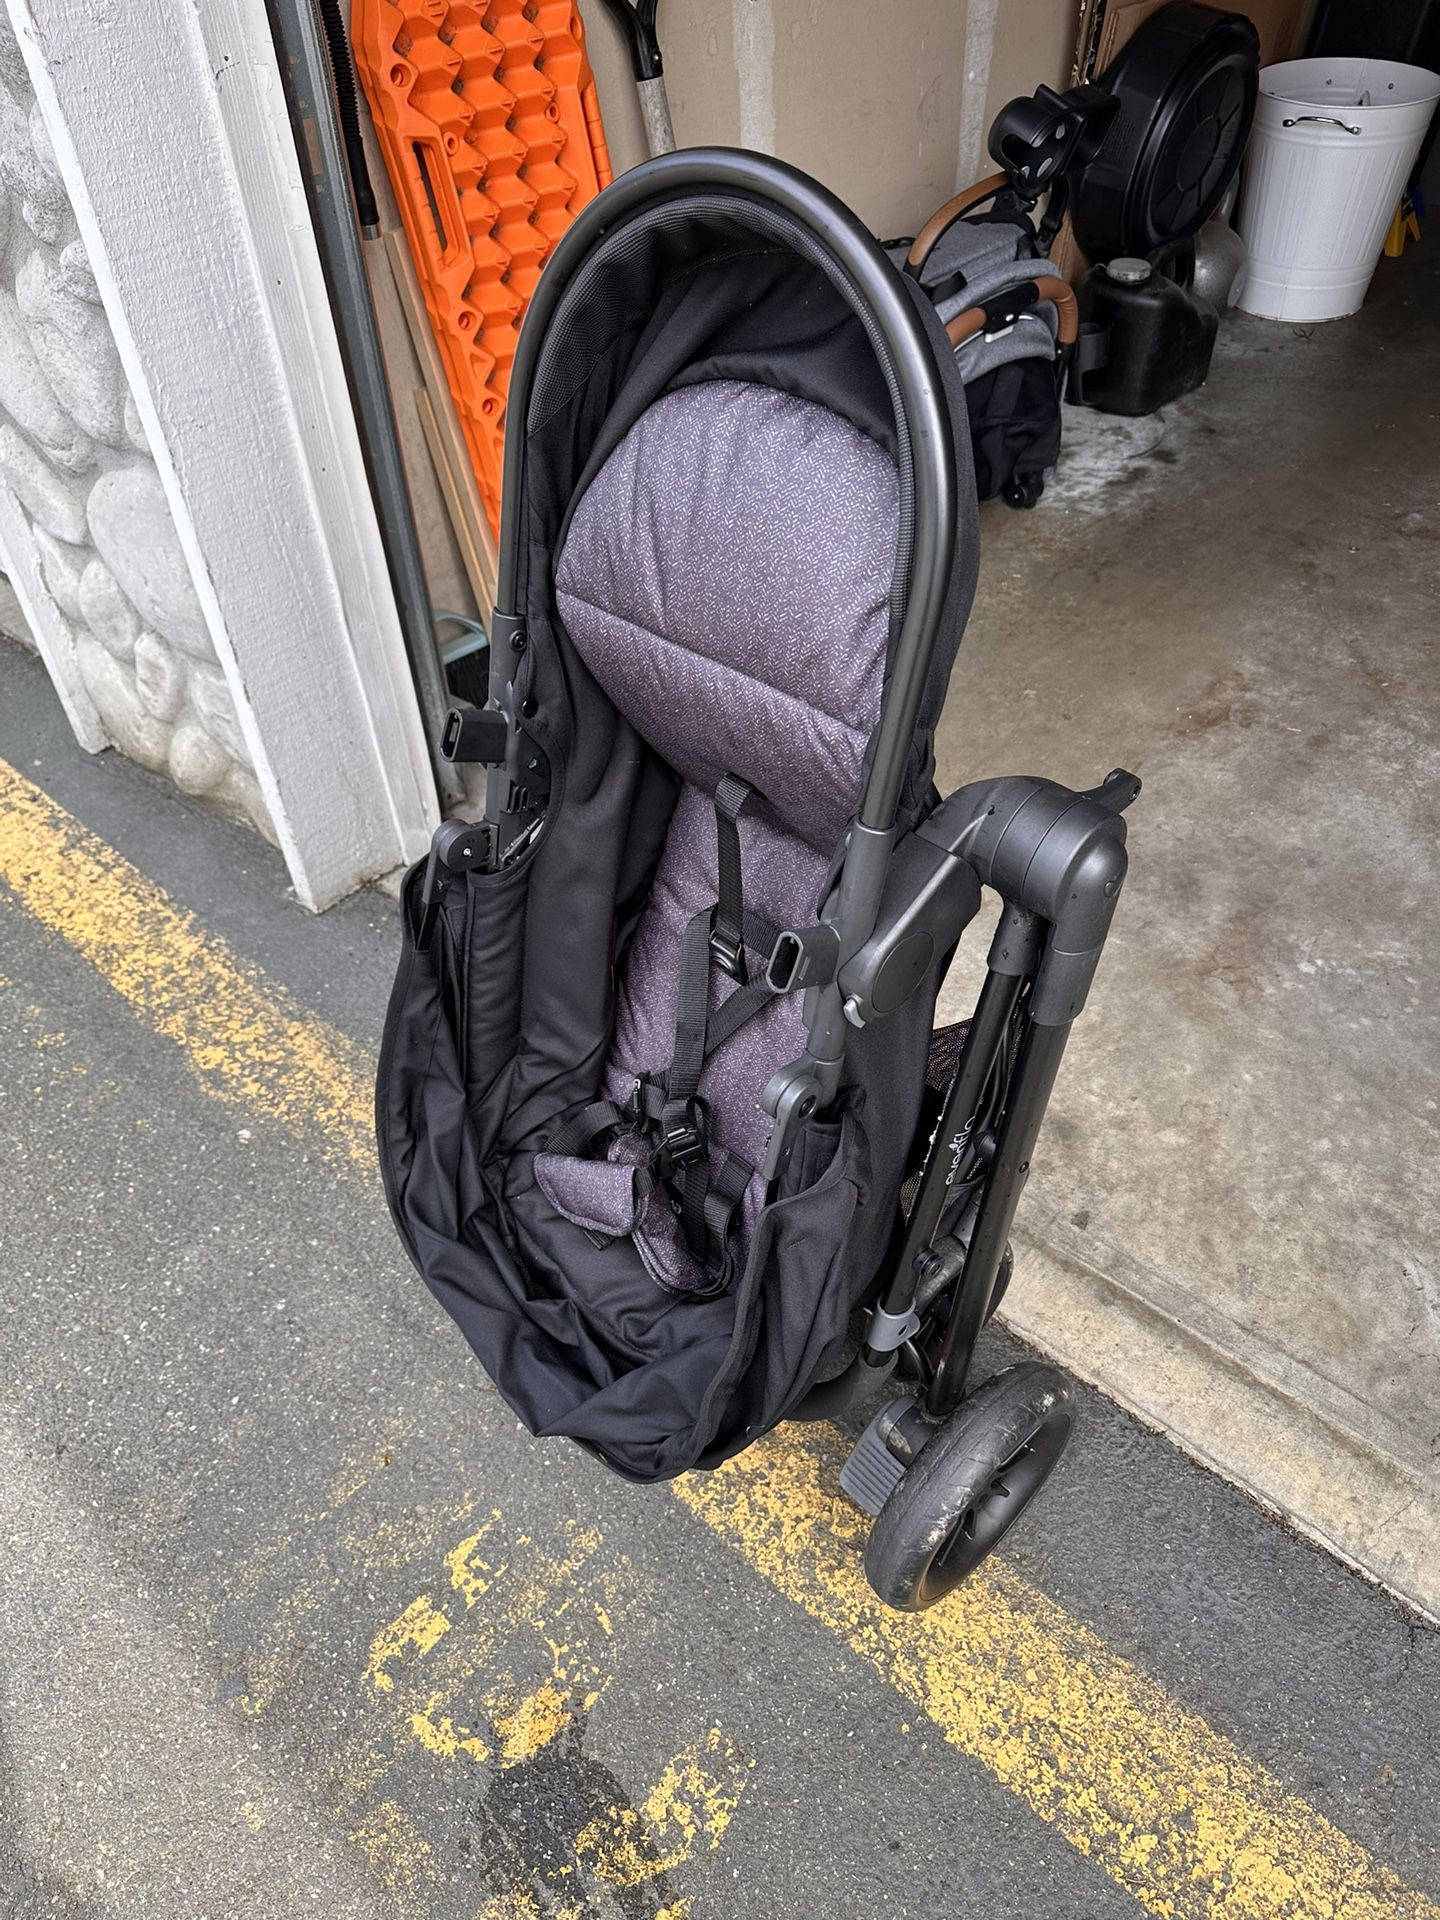 Evenflo Pivot Modular Travel System with LiteMax Infant Car Seat